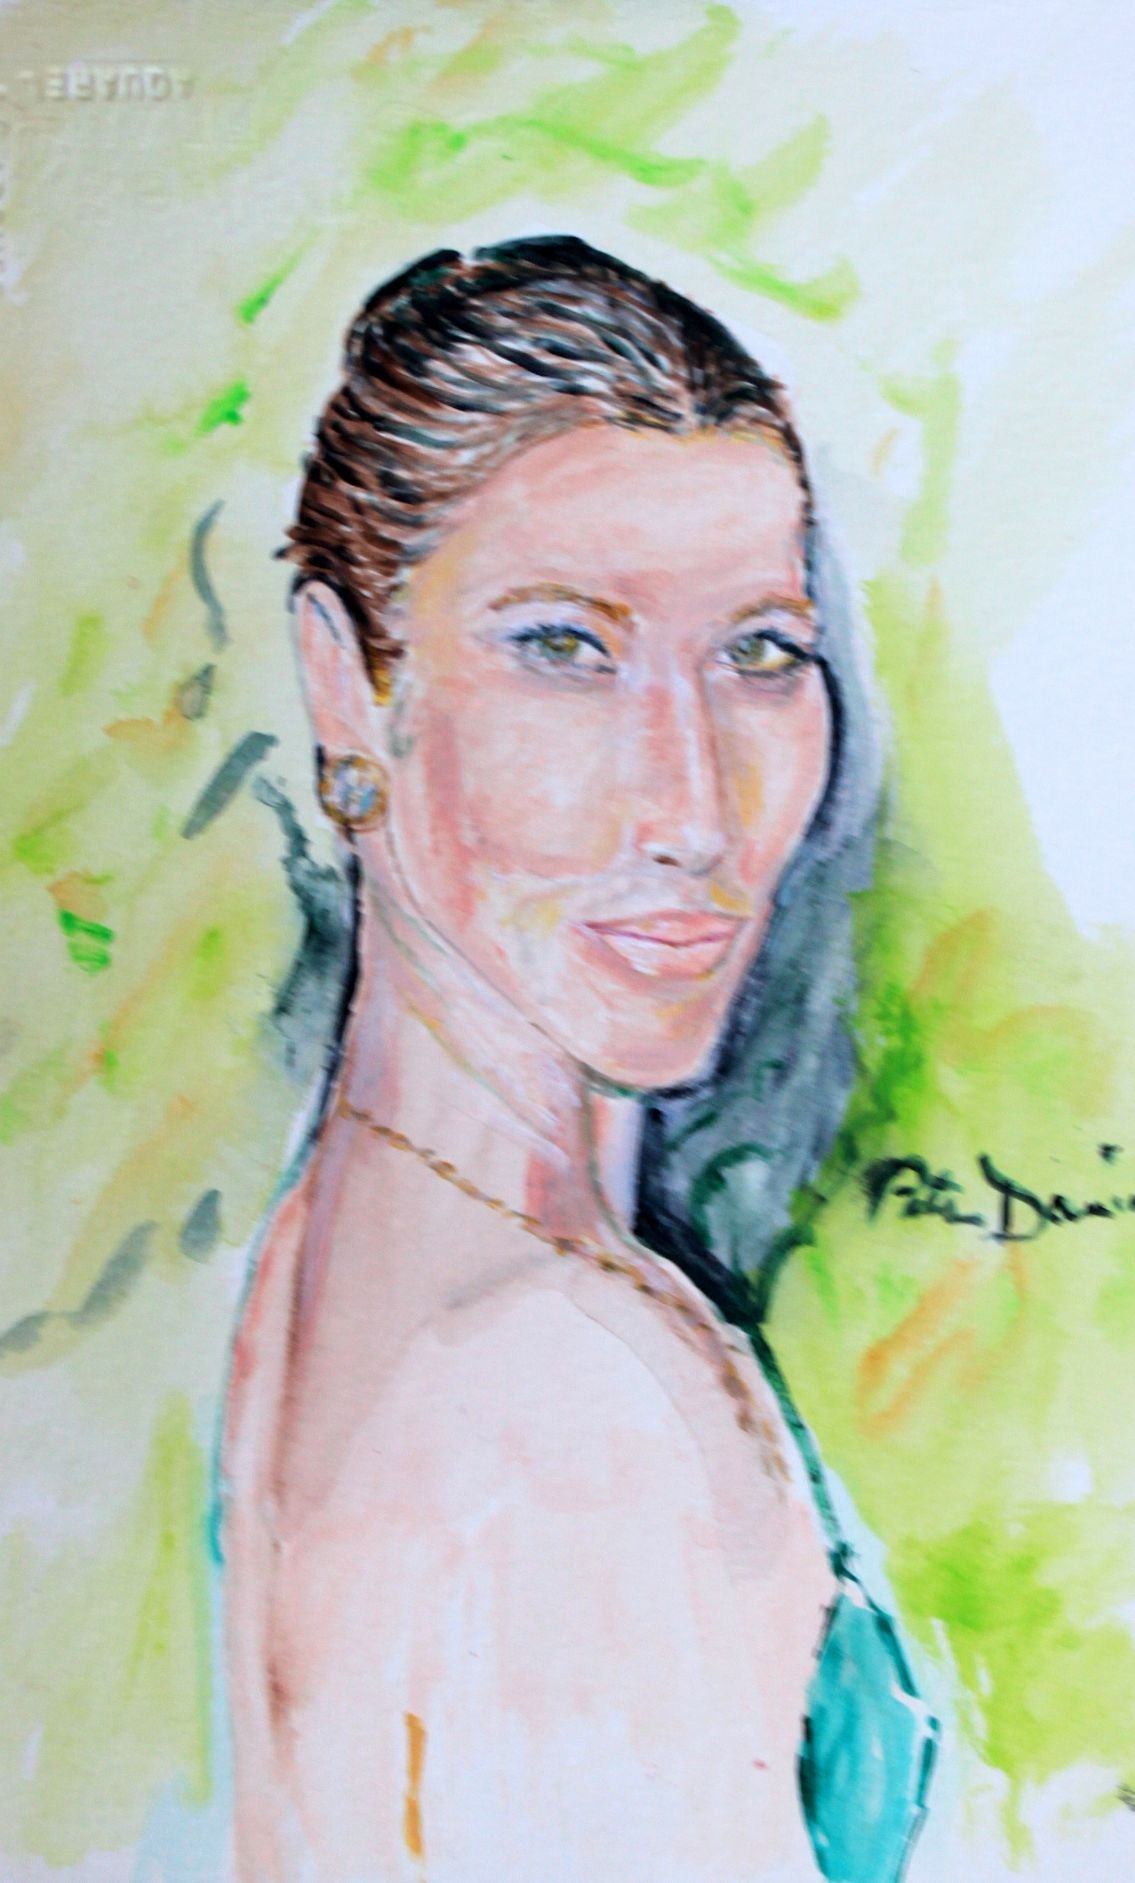 Jessica Biel Watercolour 8x12 $495